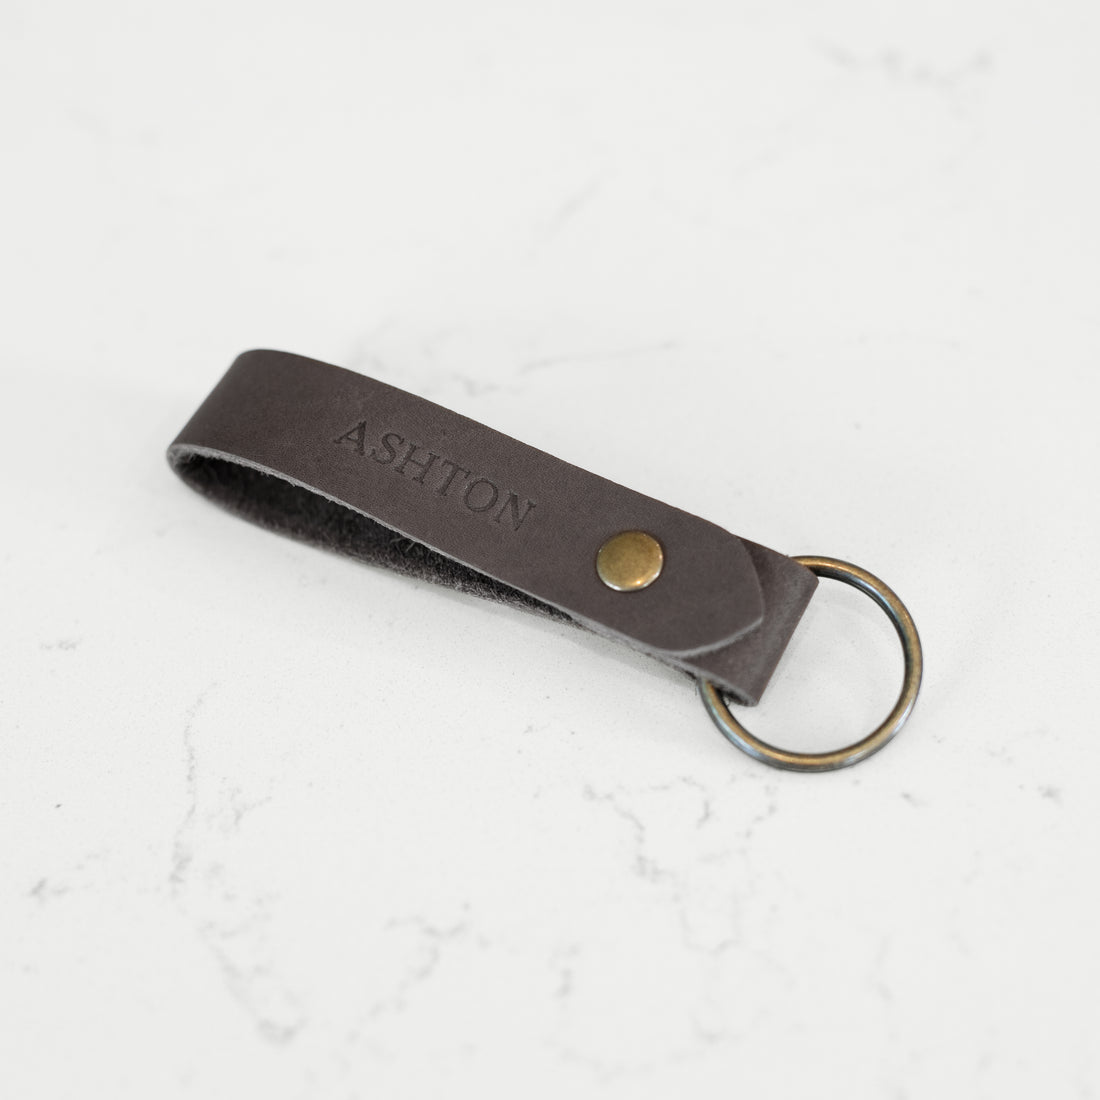 Leather Keychain Supplies, Handmade Leather Tassels